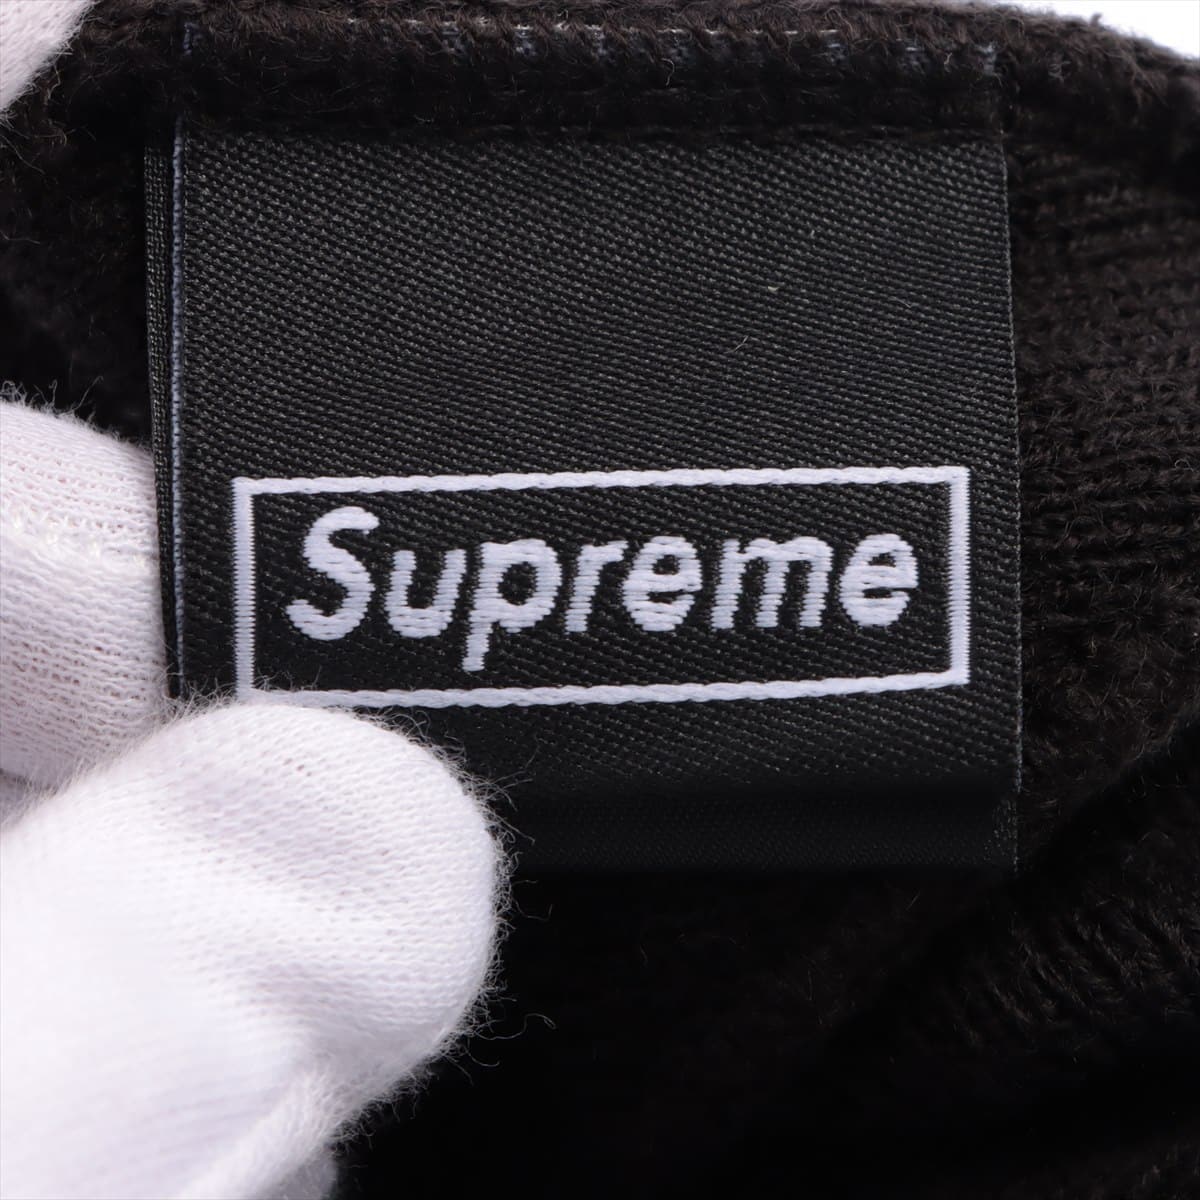 Supreme × New Era Knit cap Acrylic Black